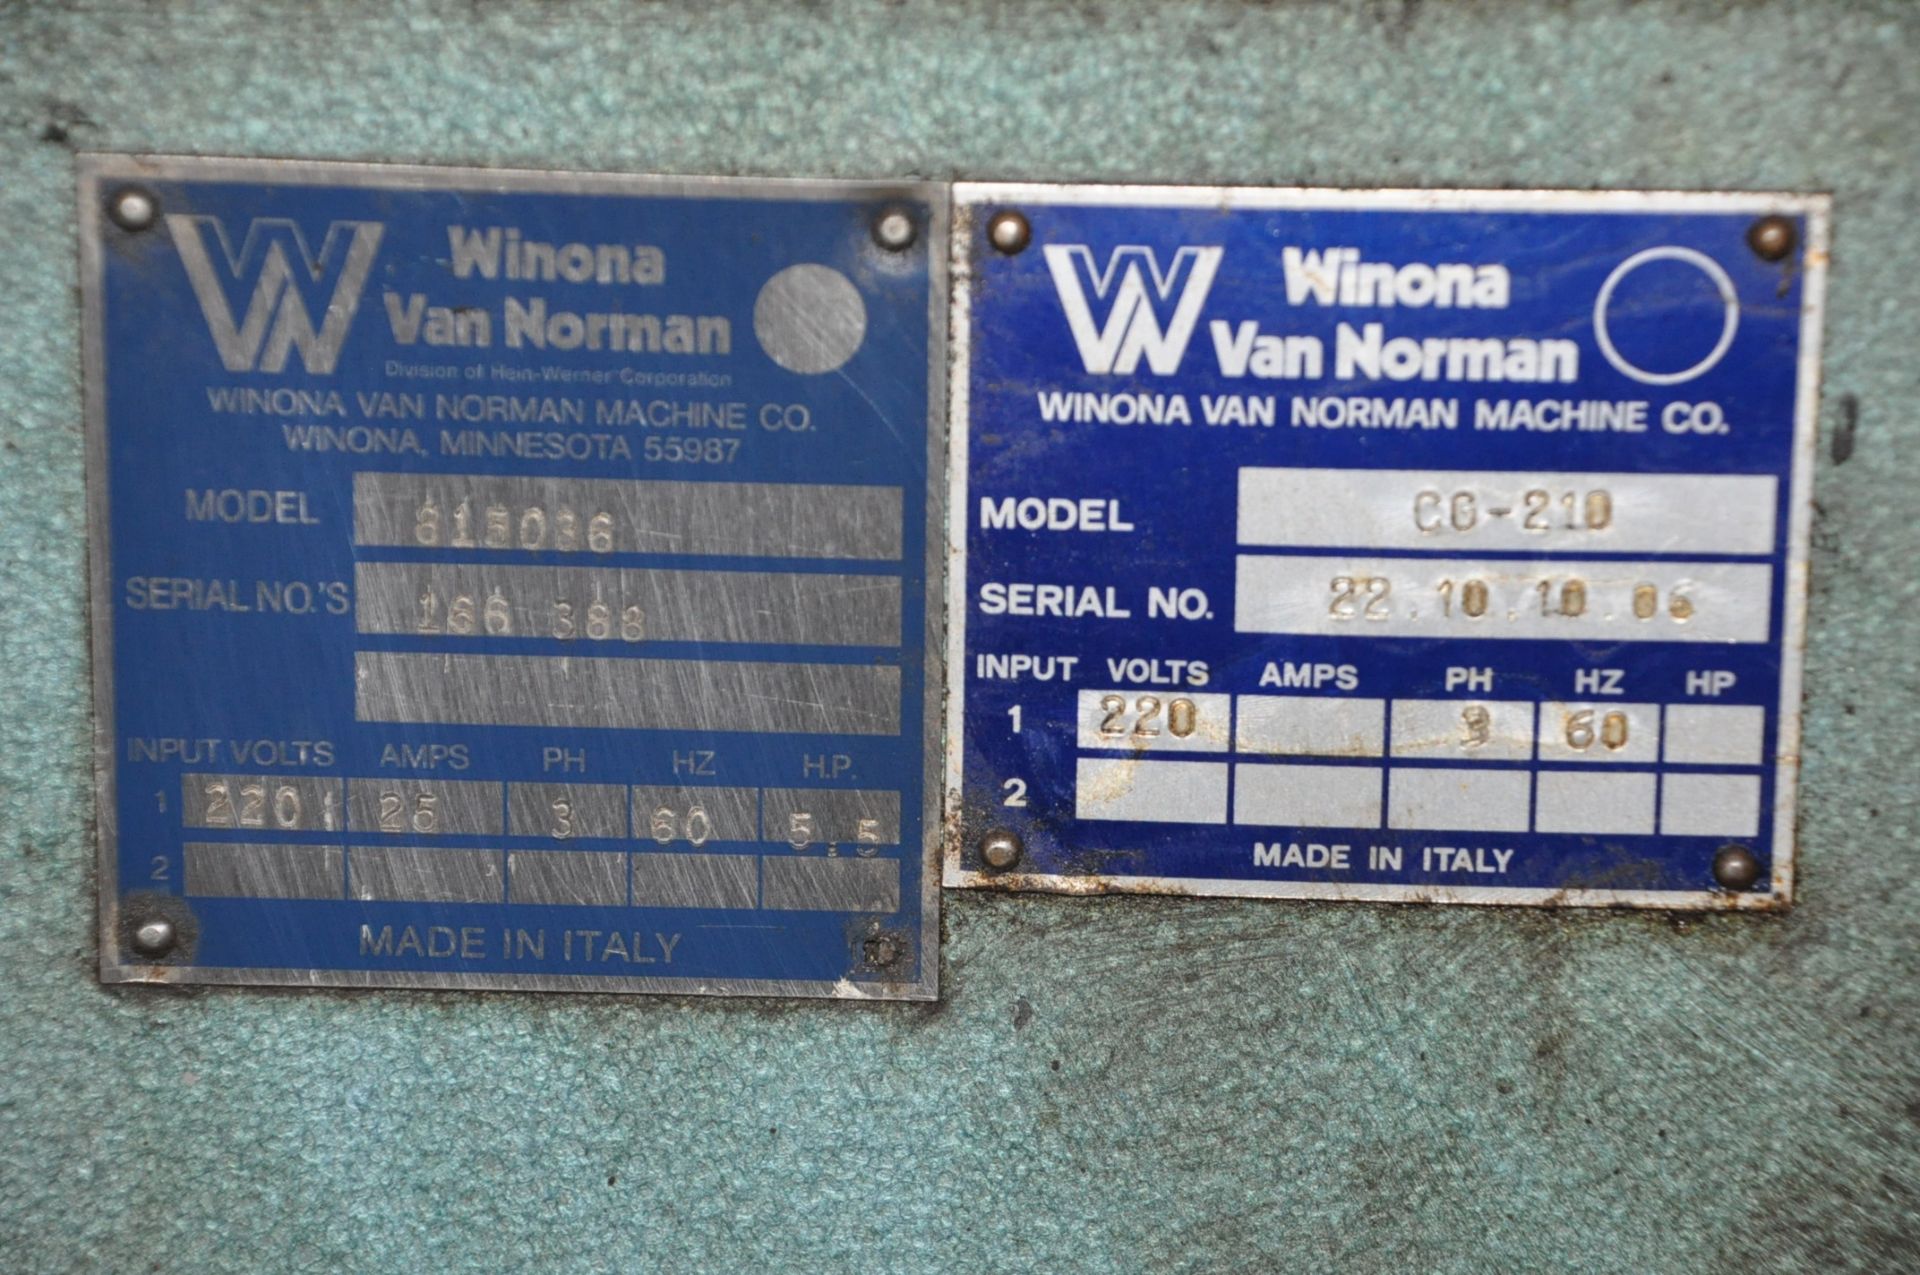 Winona Van Norman Model CG-210, Crankshaft Grinder, S/n 22.10.10.06, Dual Opposed 7" 3-Jaw - Image 10 of 10